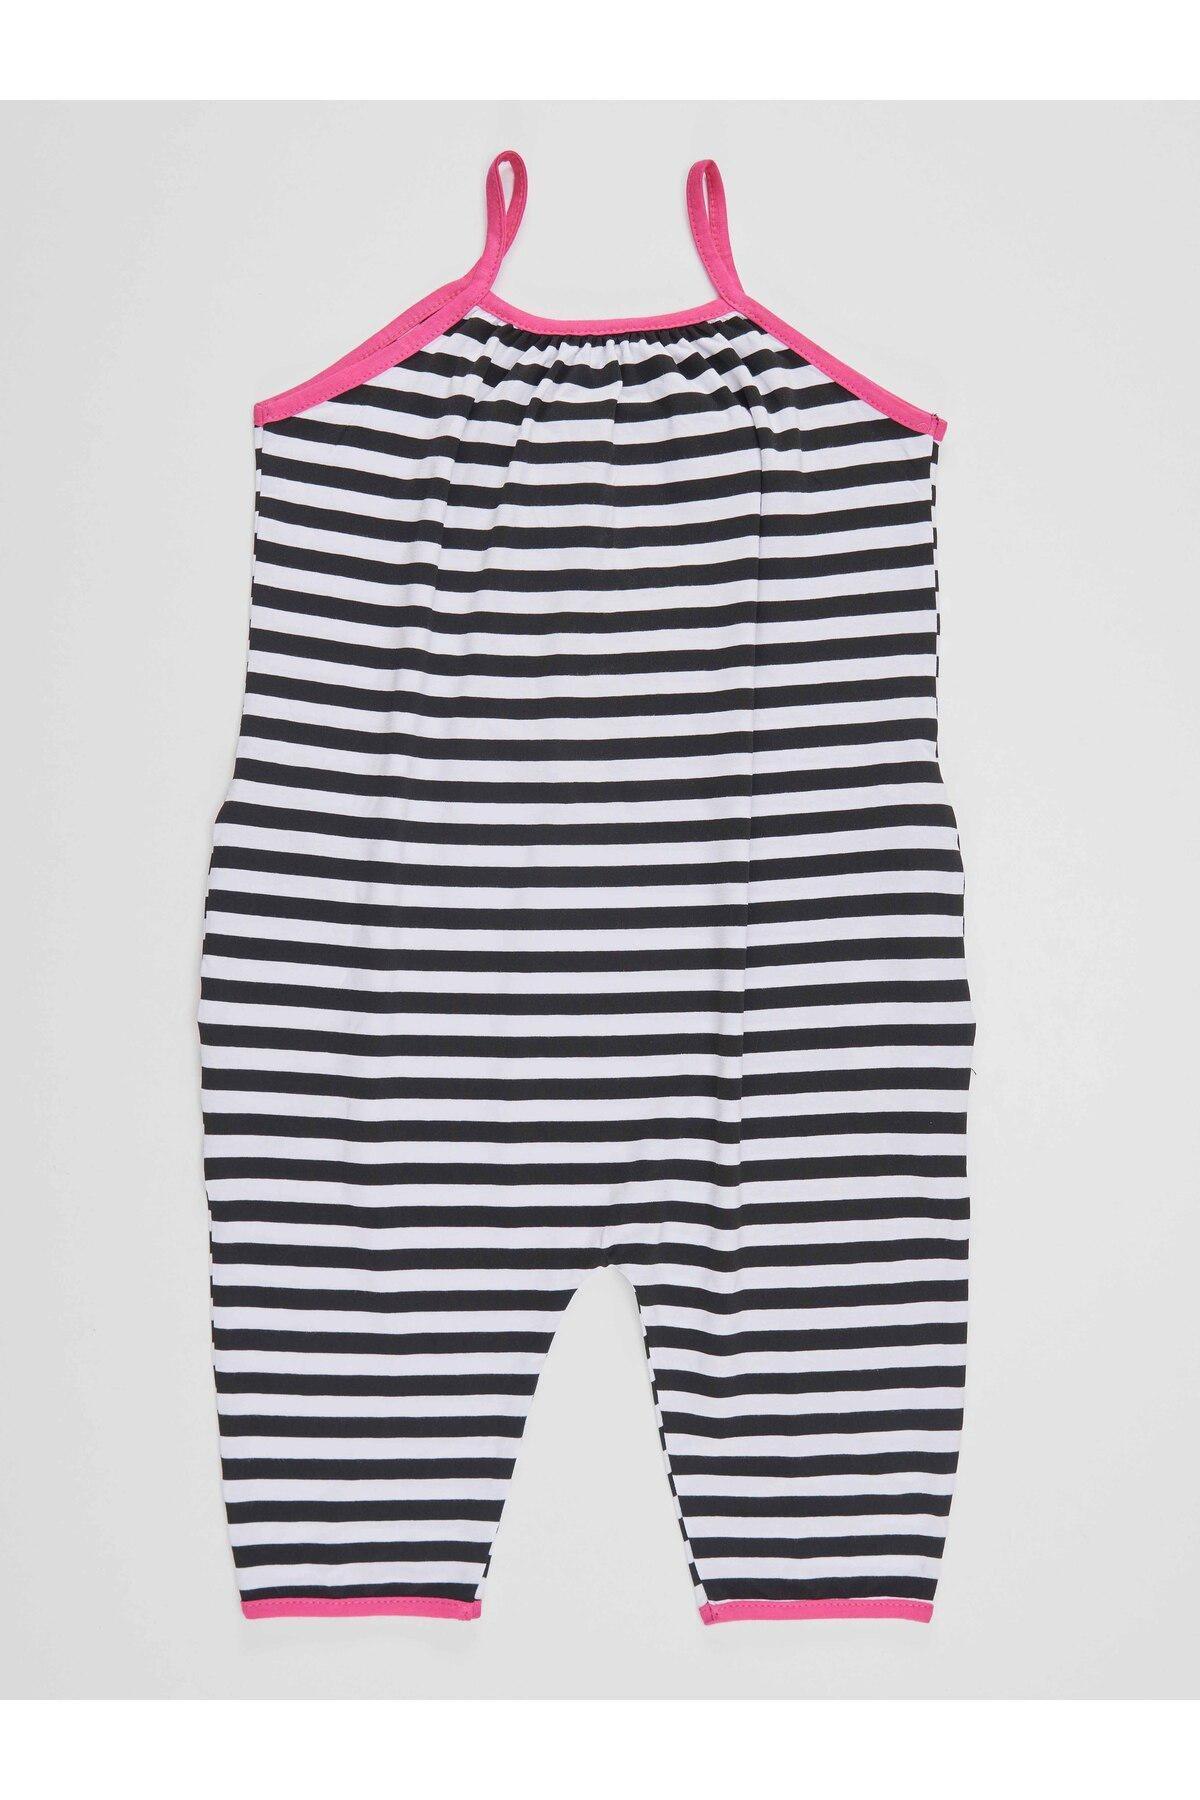 Denokids - Black Striped Printed Jumpsuit, Kids Girls